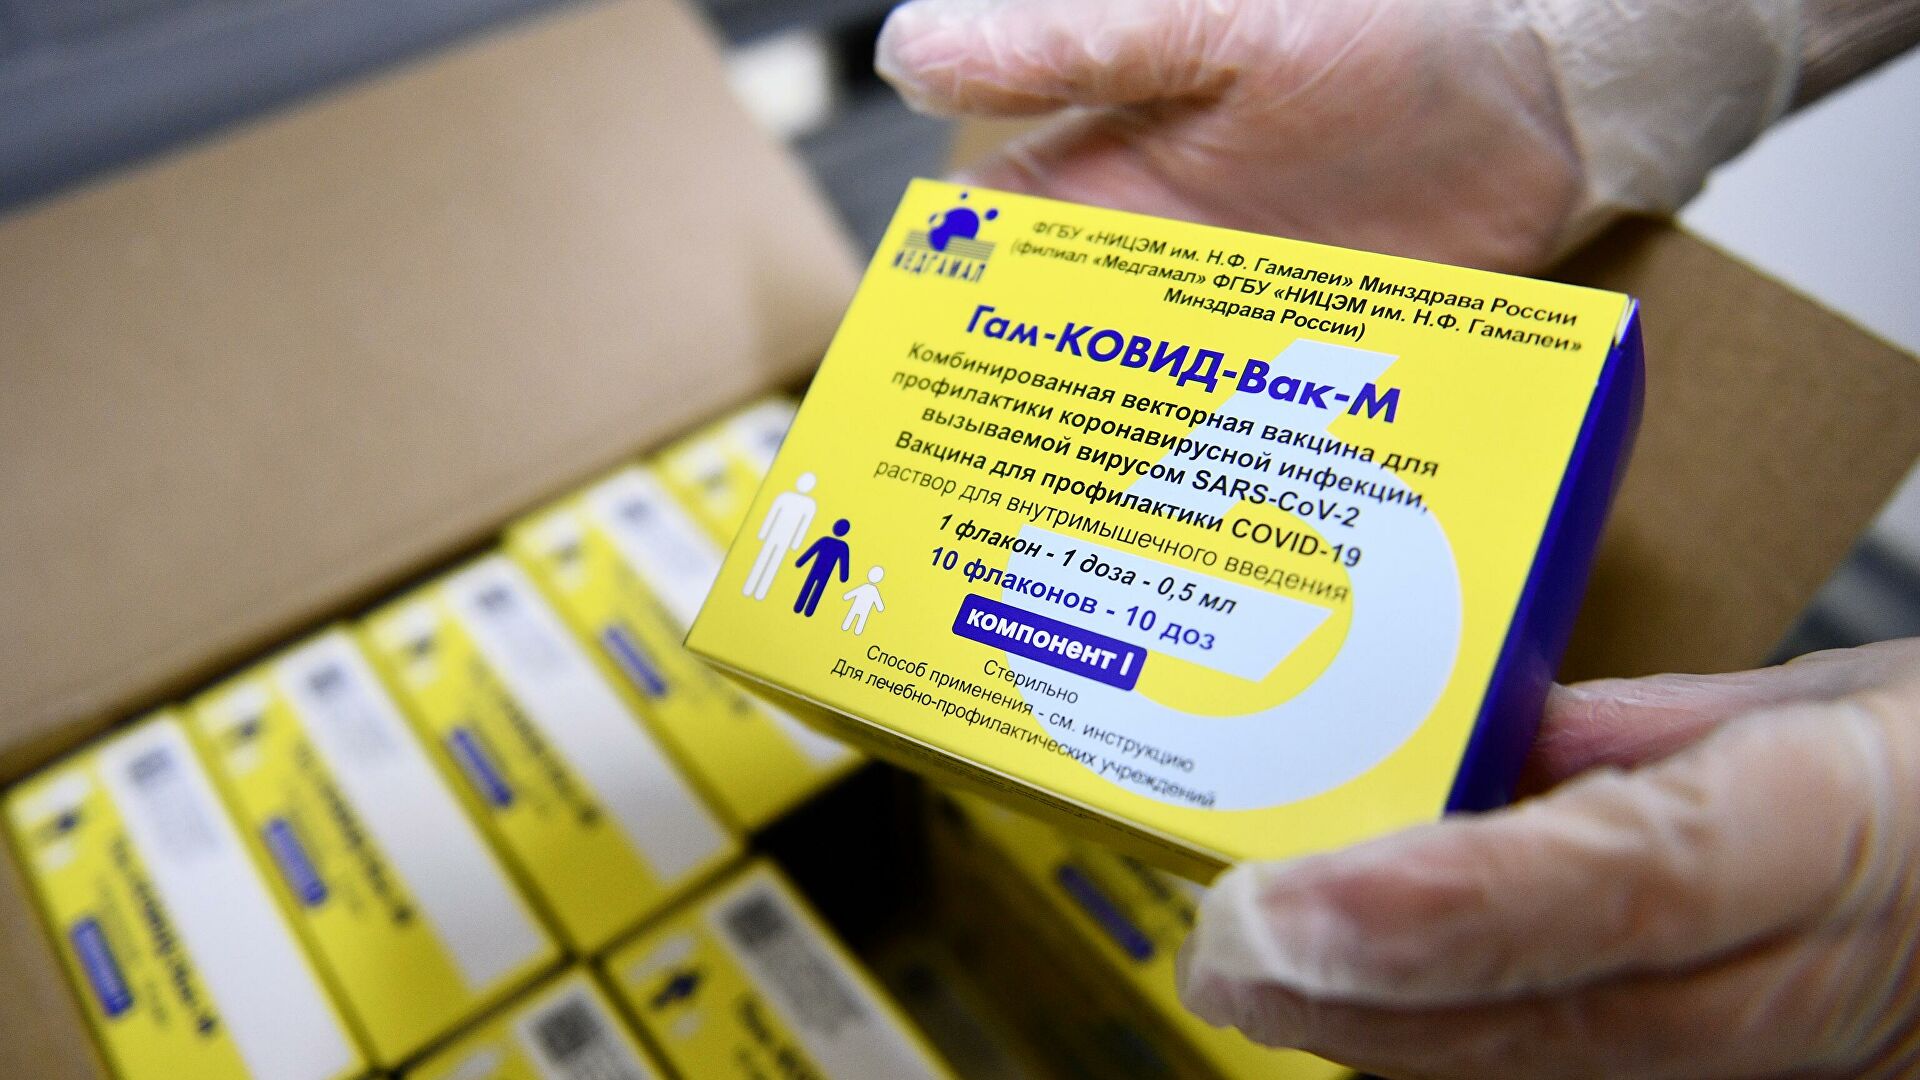 В Казахстане зарегистрировали вакцину против COVID-19 «Спутник М» (Гам-КОВИД-Вак-М)